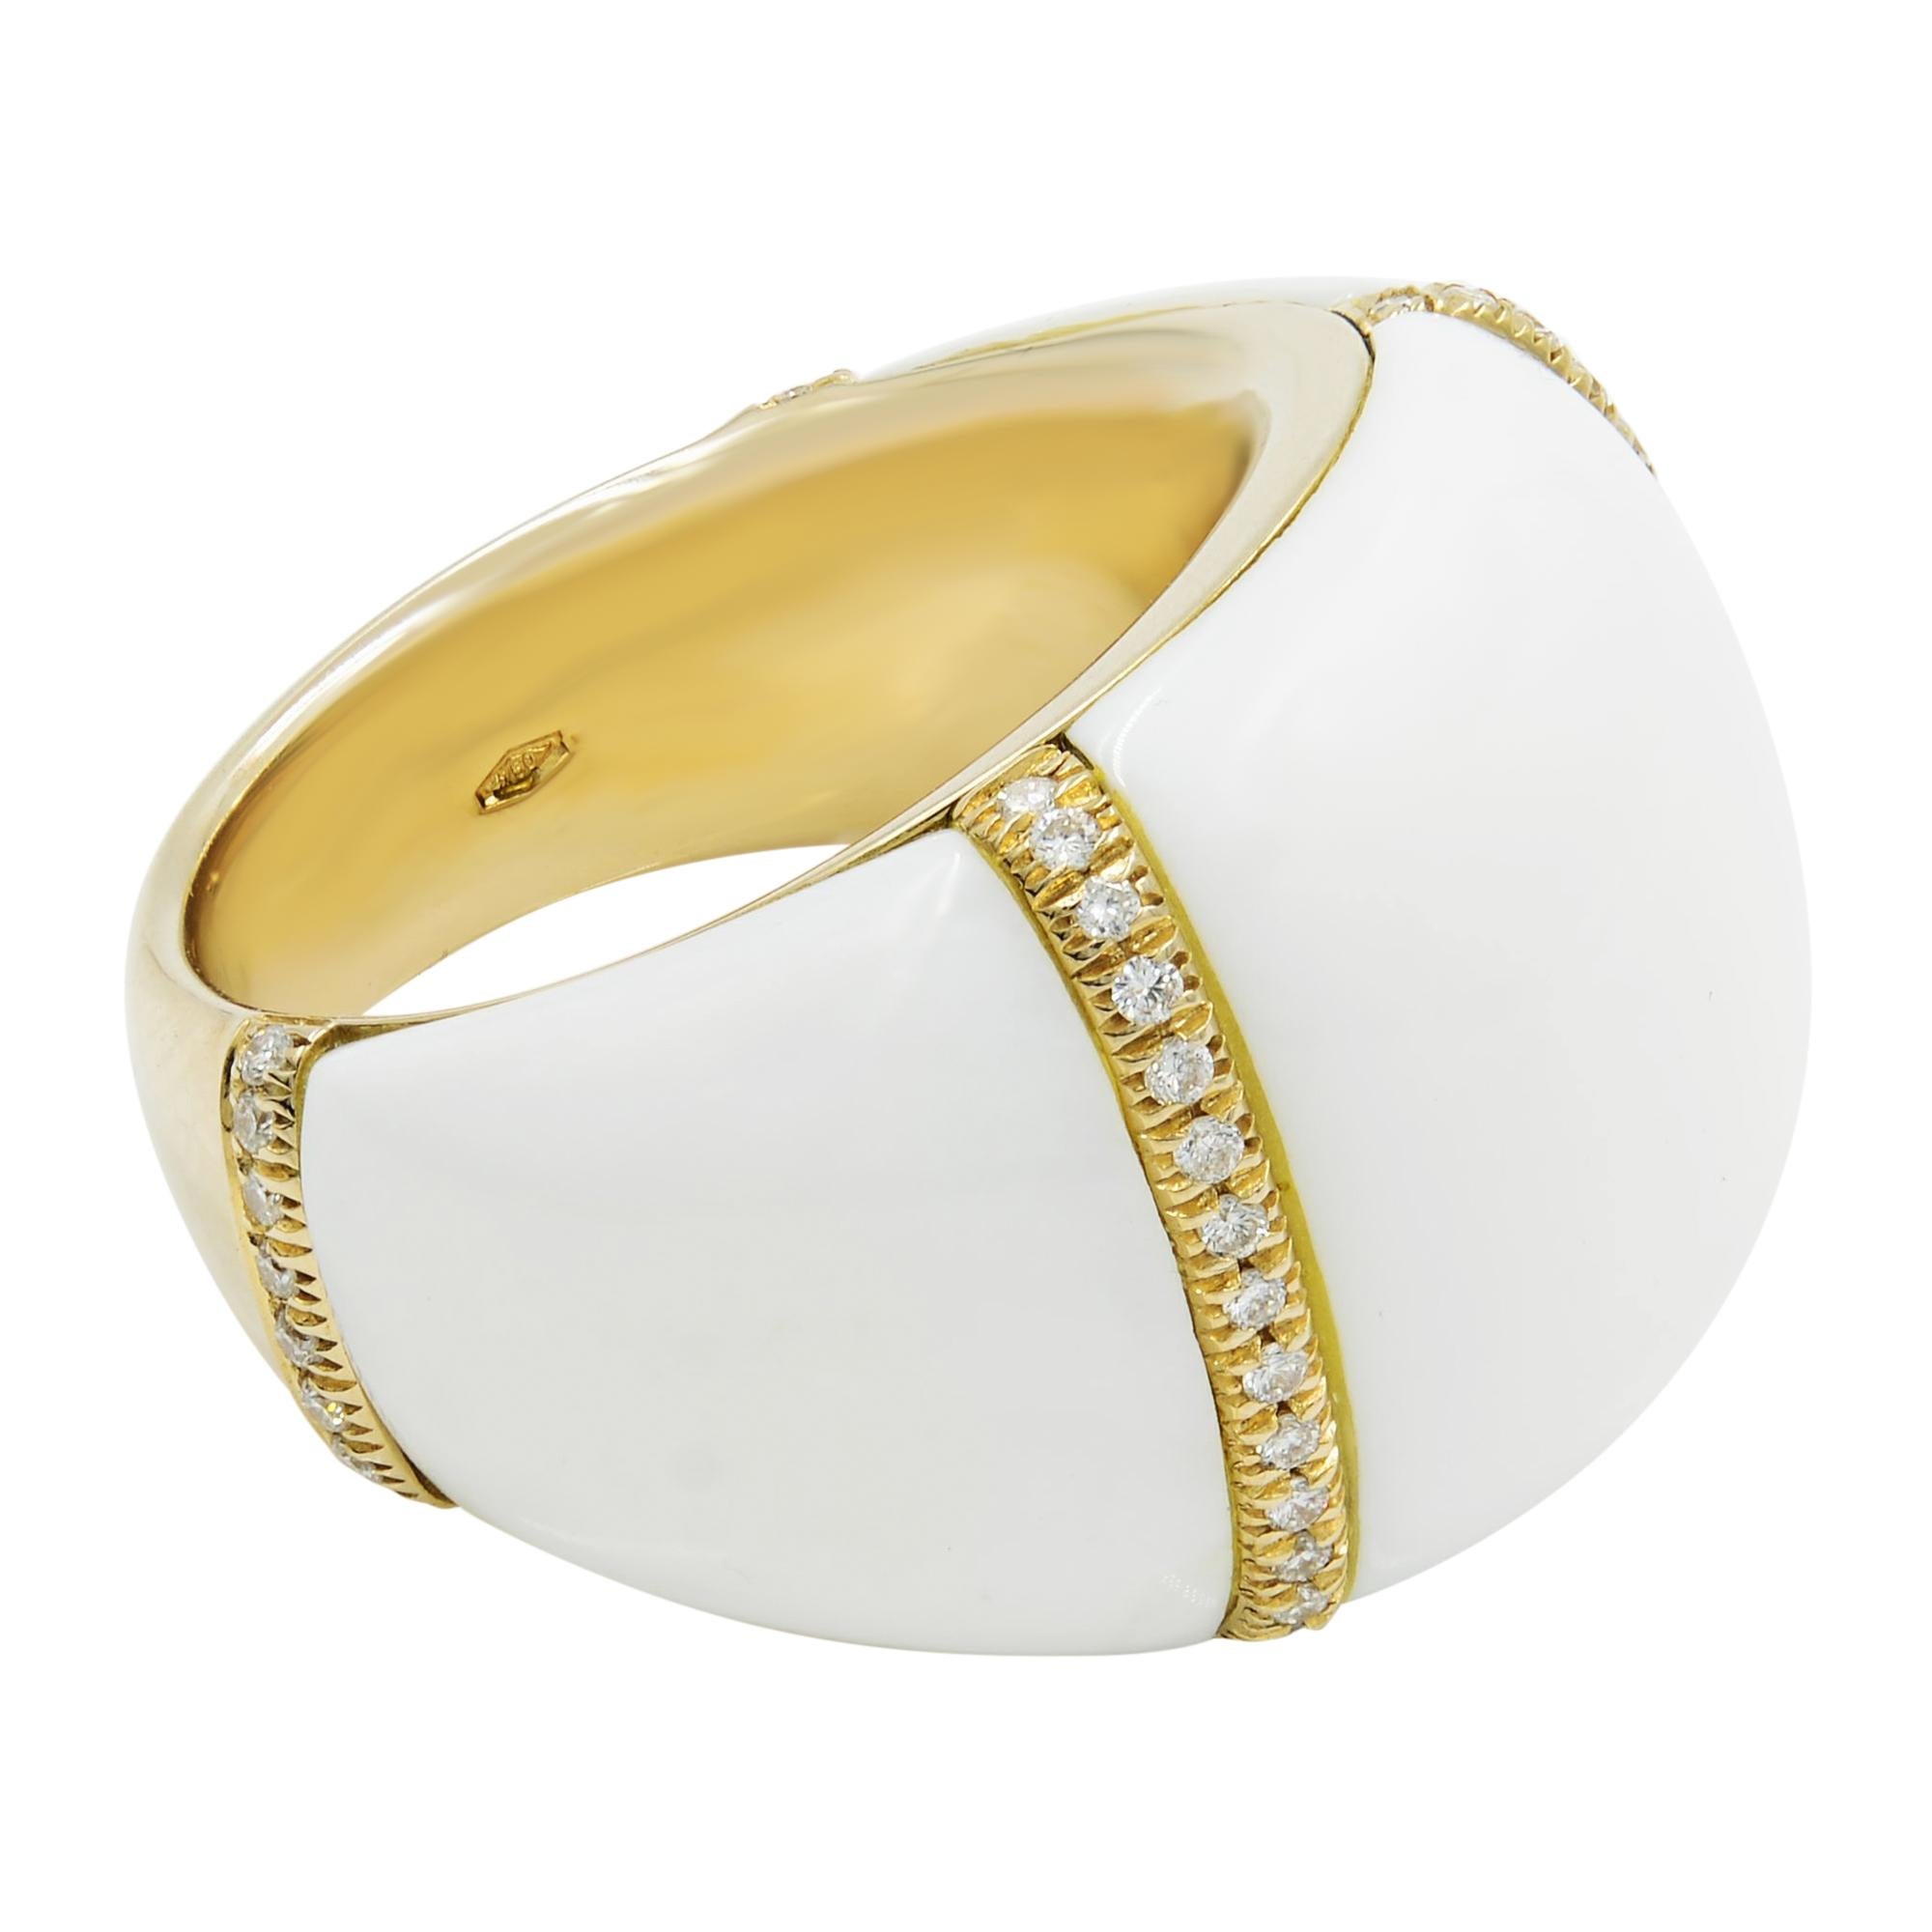 Modern Chantecler White Ceramic Diamond Dome Shaped Ring 18K Yellow Gold 0.50ctw Size 7